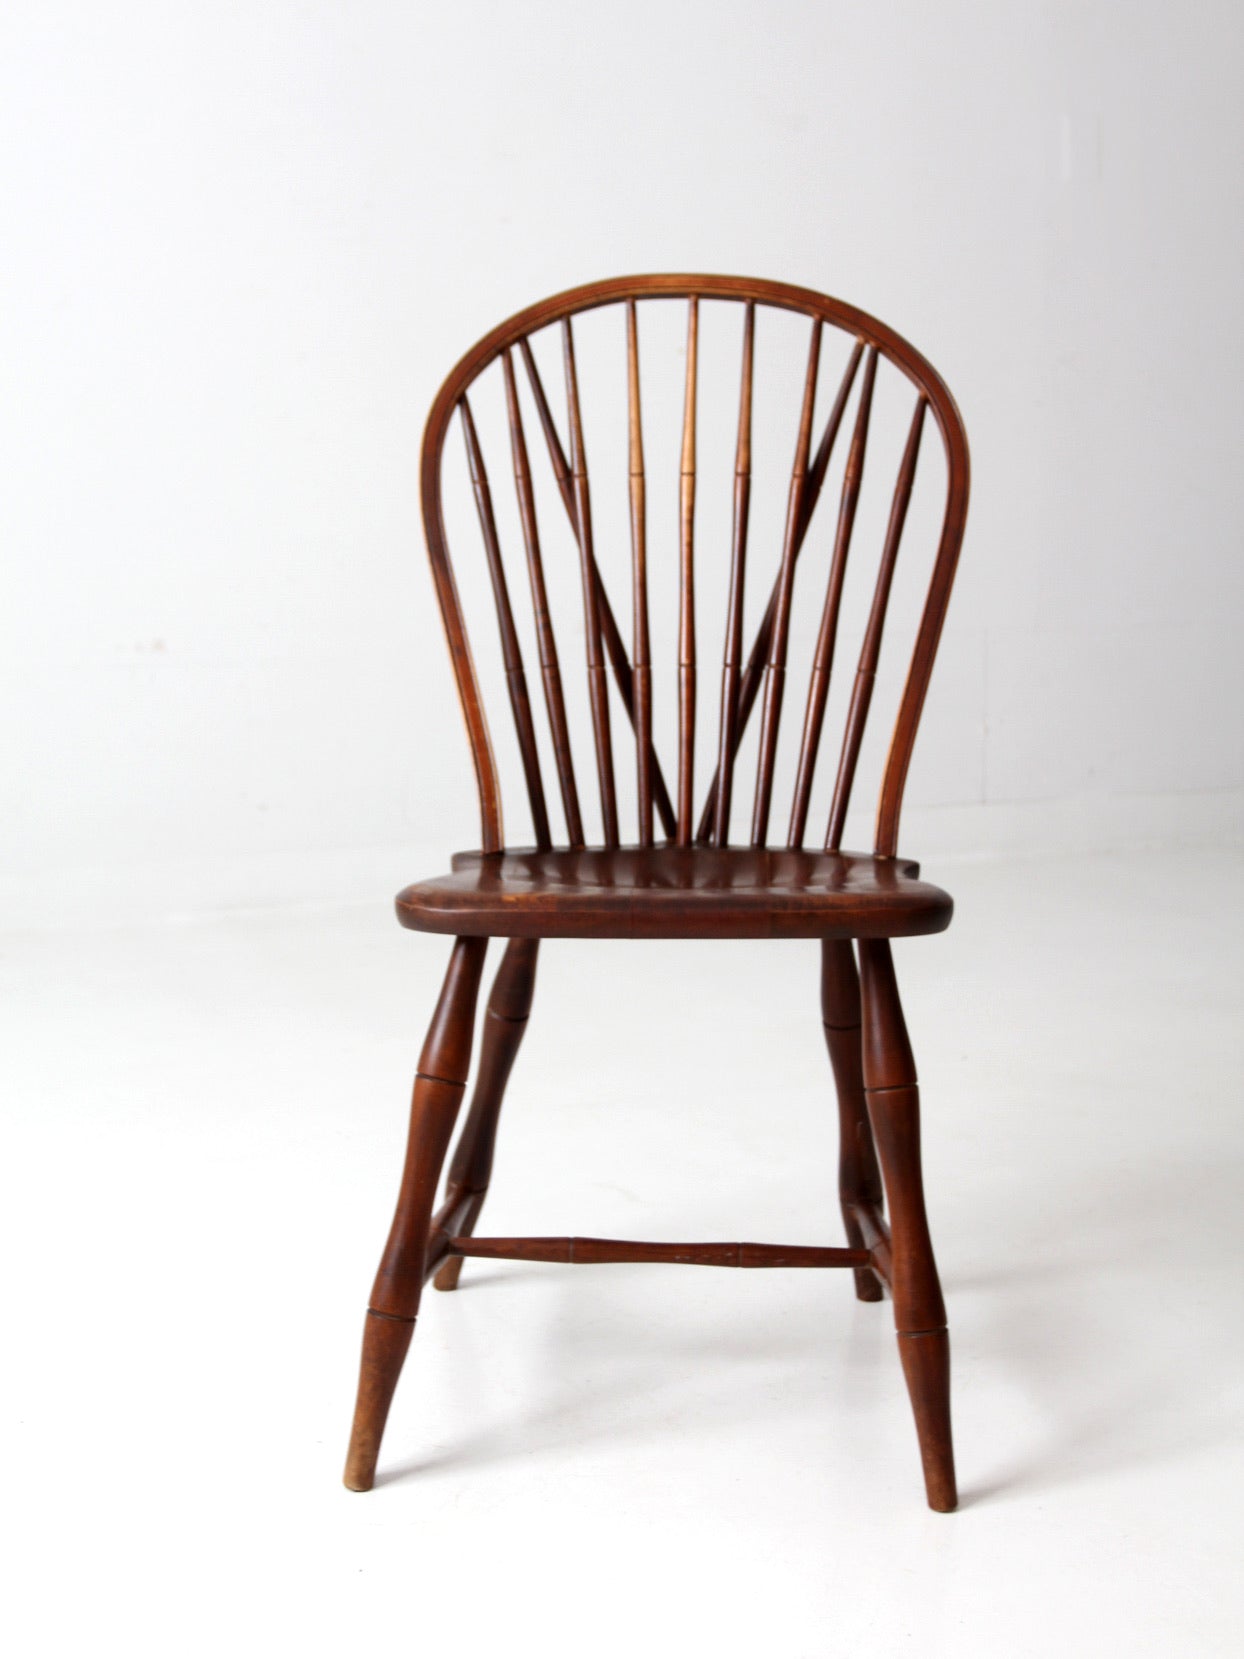 antique Nichols & Stone Windsor chair